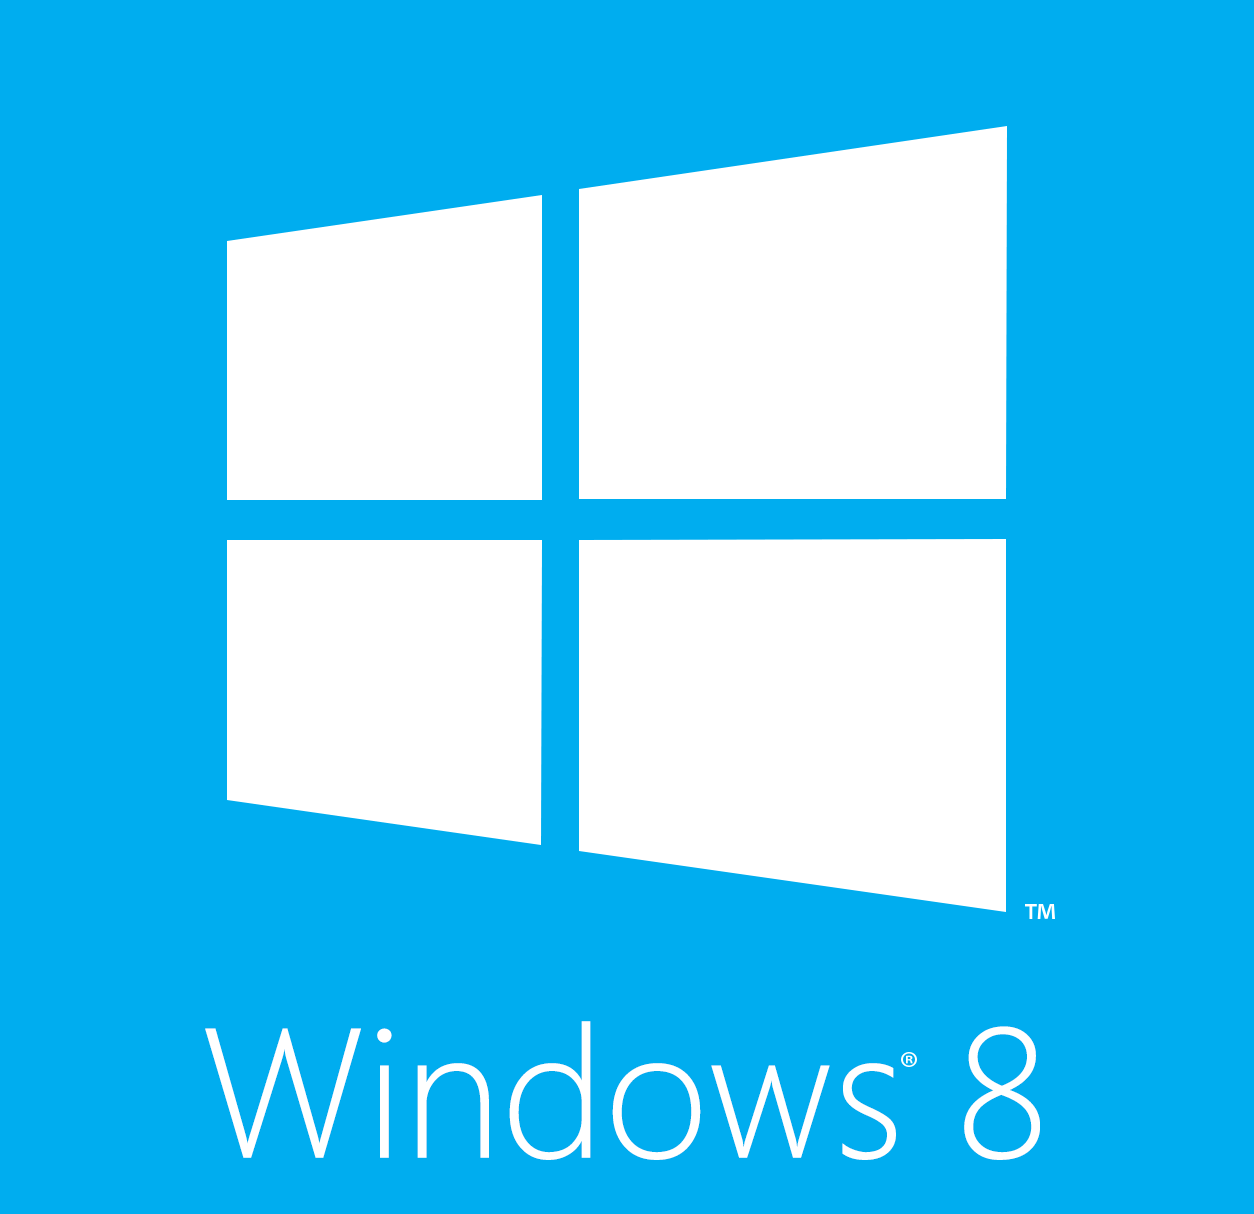 Windows 8 Server Logo - Windows 8 Logo